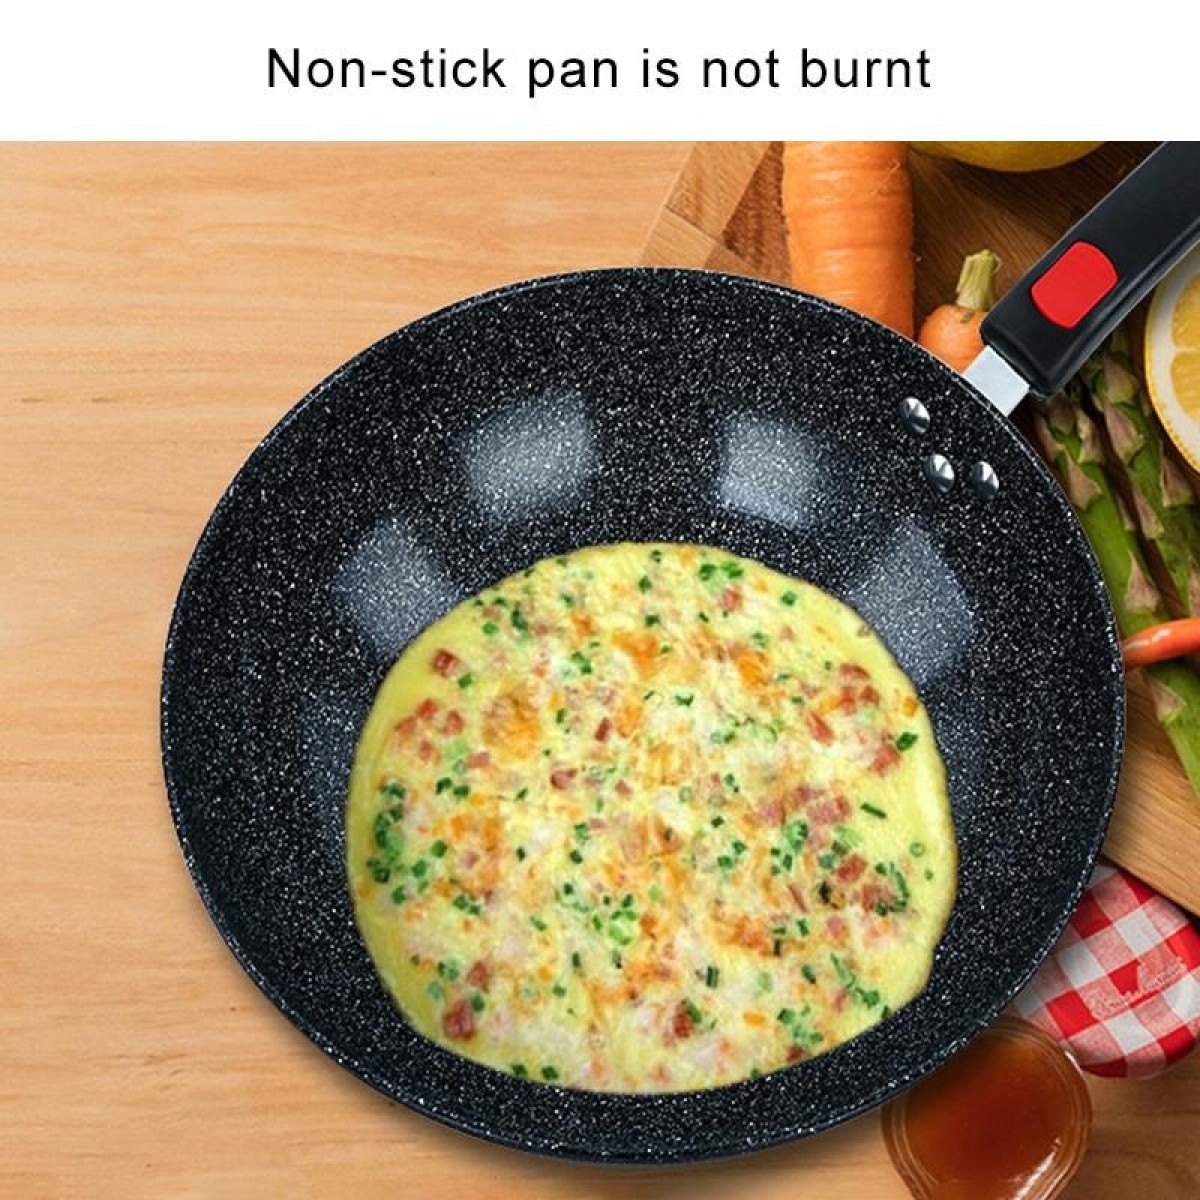 Induction Cooker General Health Maifan Stone Wok Non-stick Pan, Mouth Diameter: 32cm